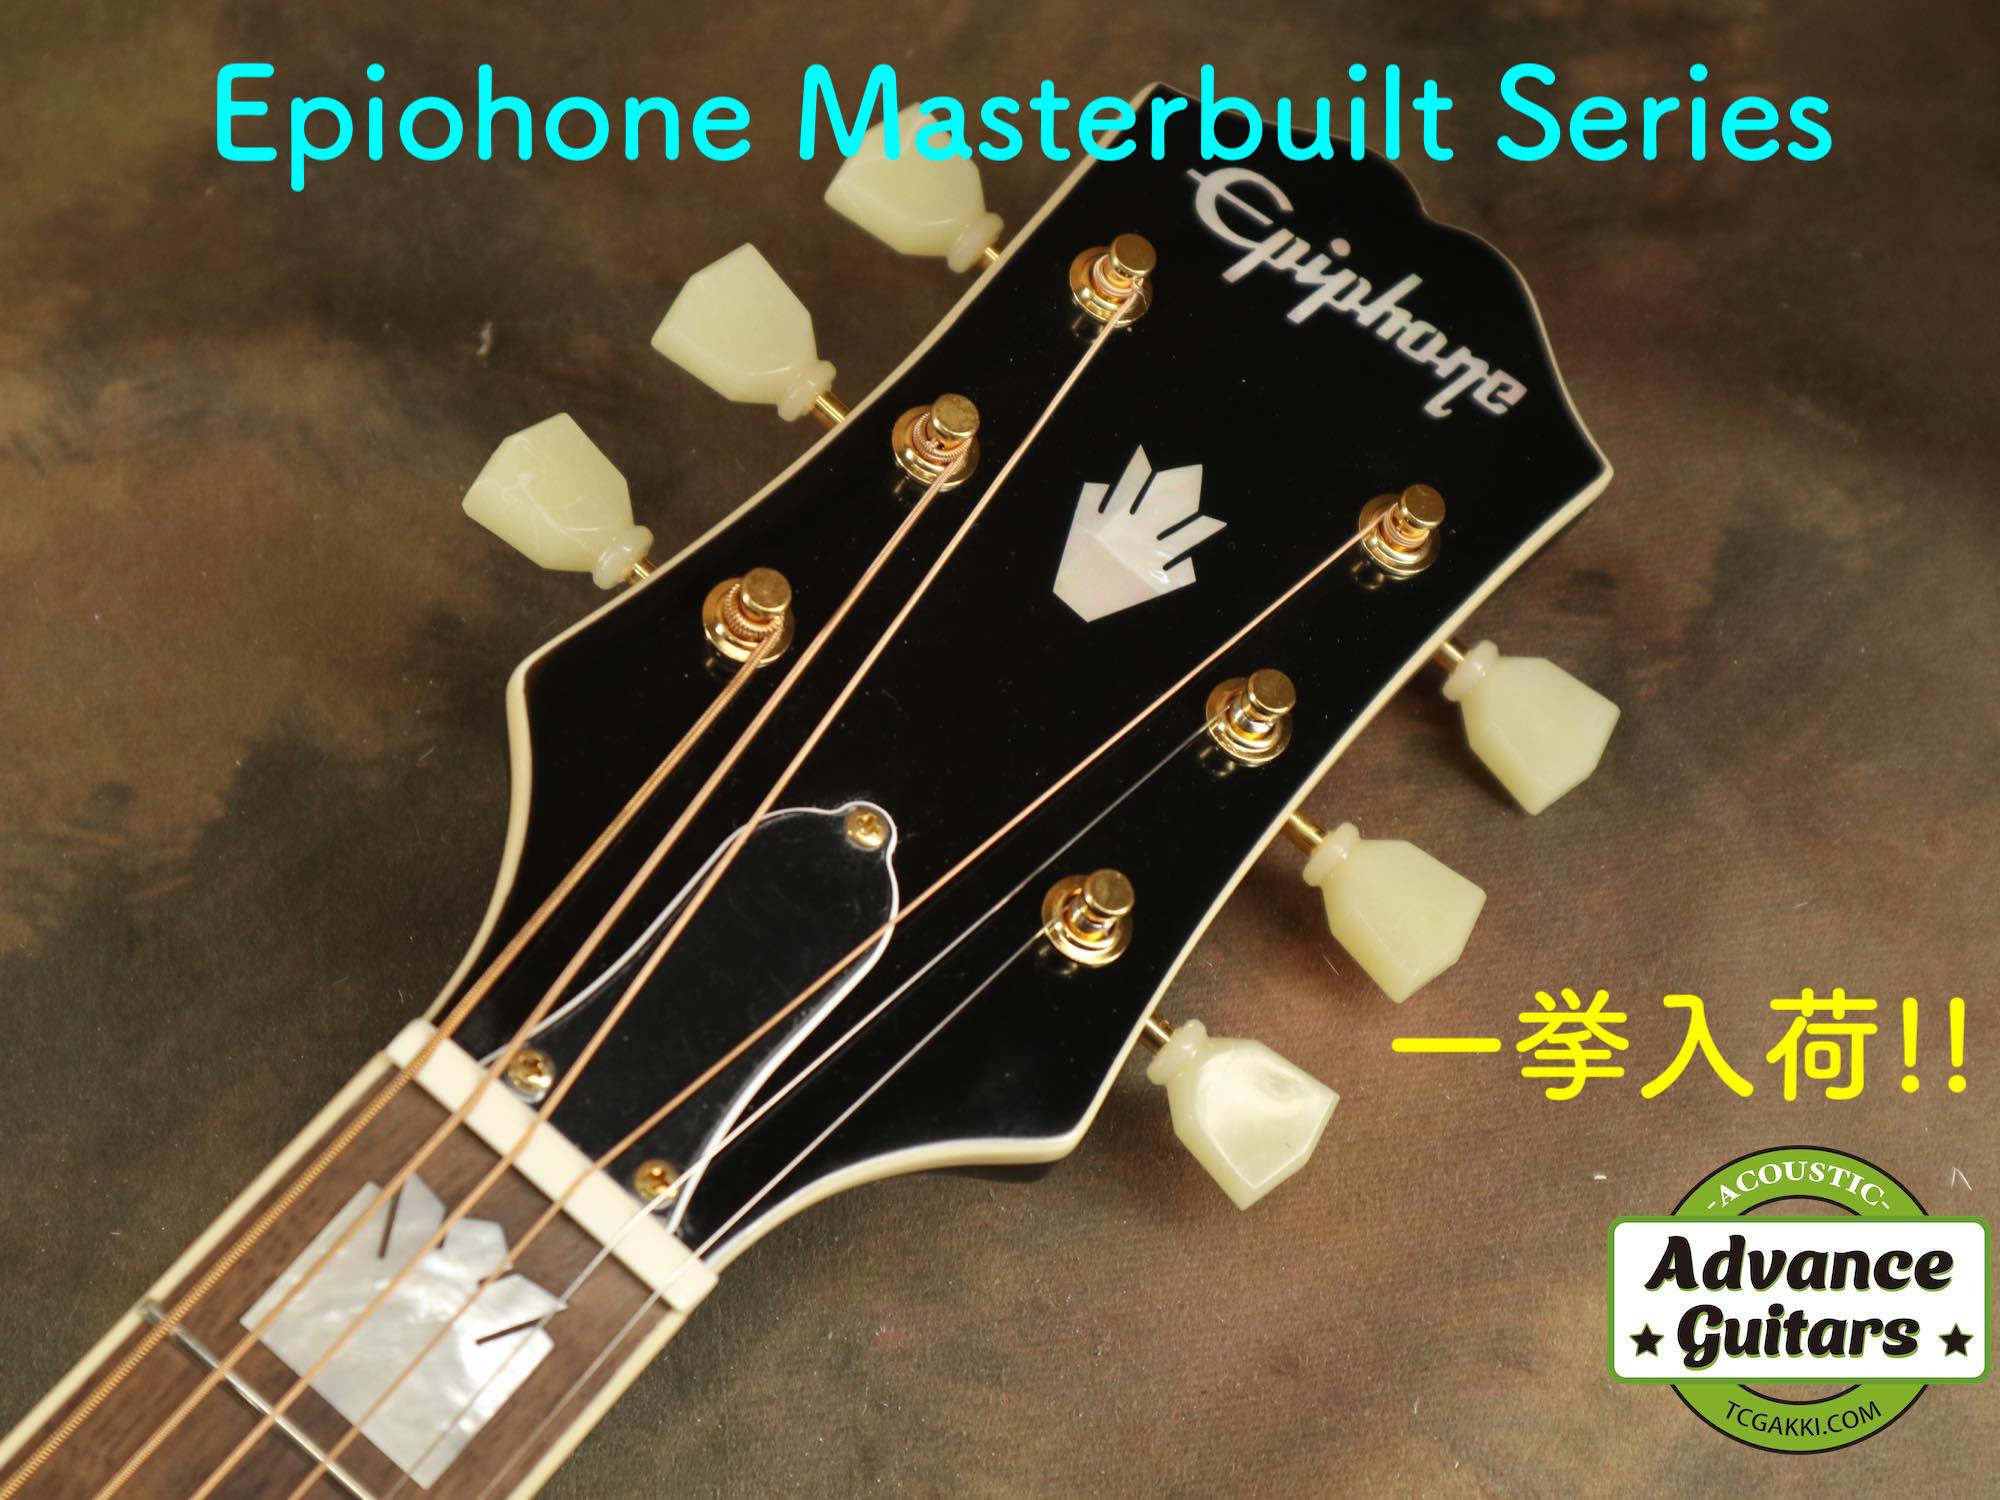 Epiohone Masterbilt Series 一挙入荷！！【Advance Guitars】 - TC楽器 - TCGAKKI